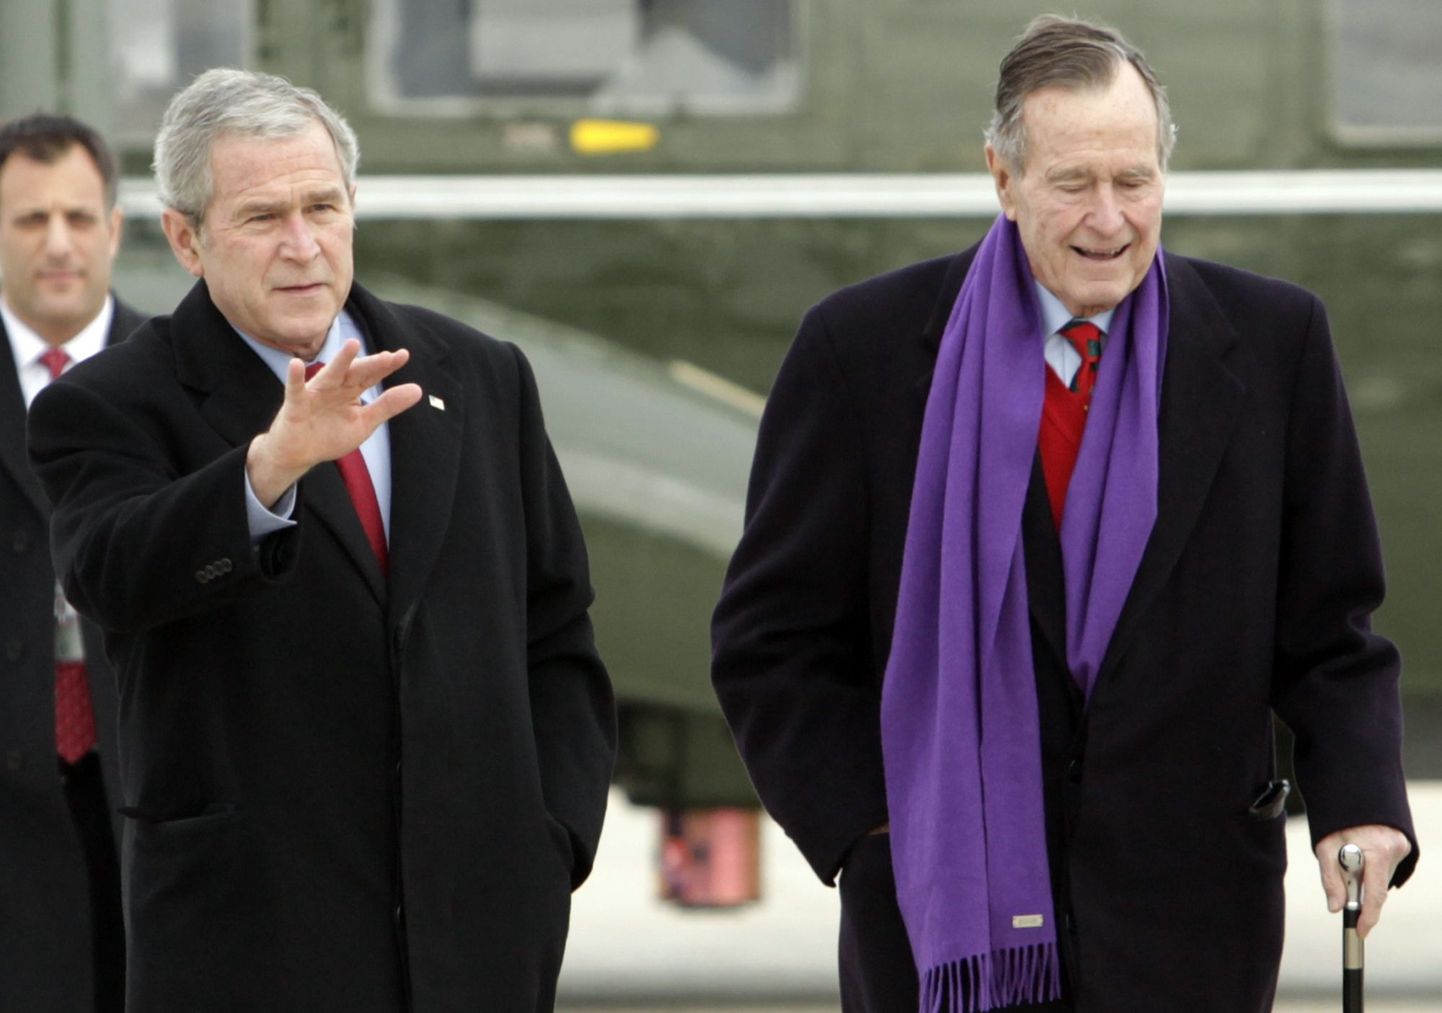 USA praegune president George W. Bush kõndimas oma isa, endise presidendi George H.W. Bushi kõrval.